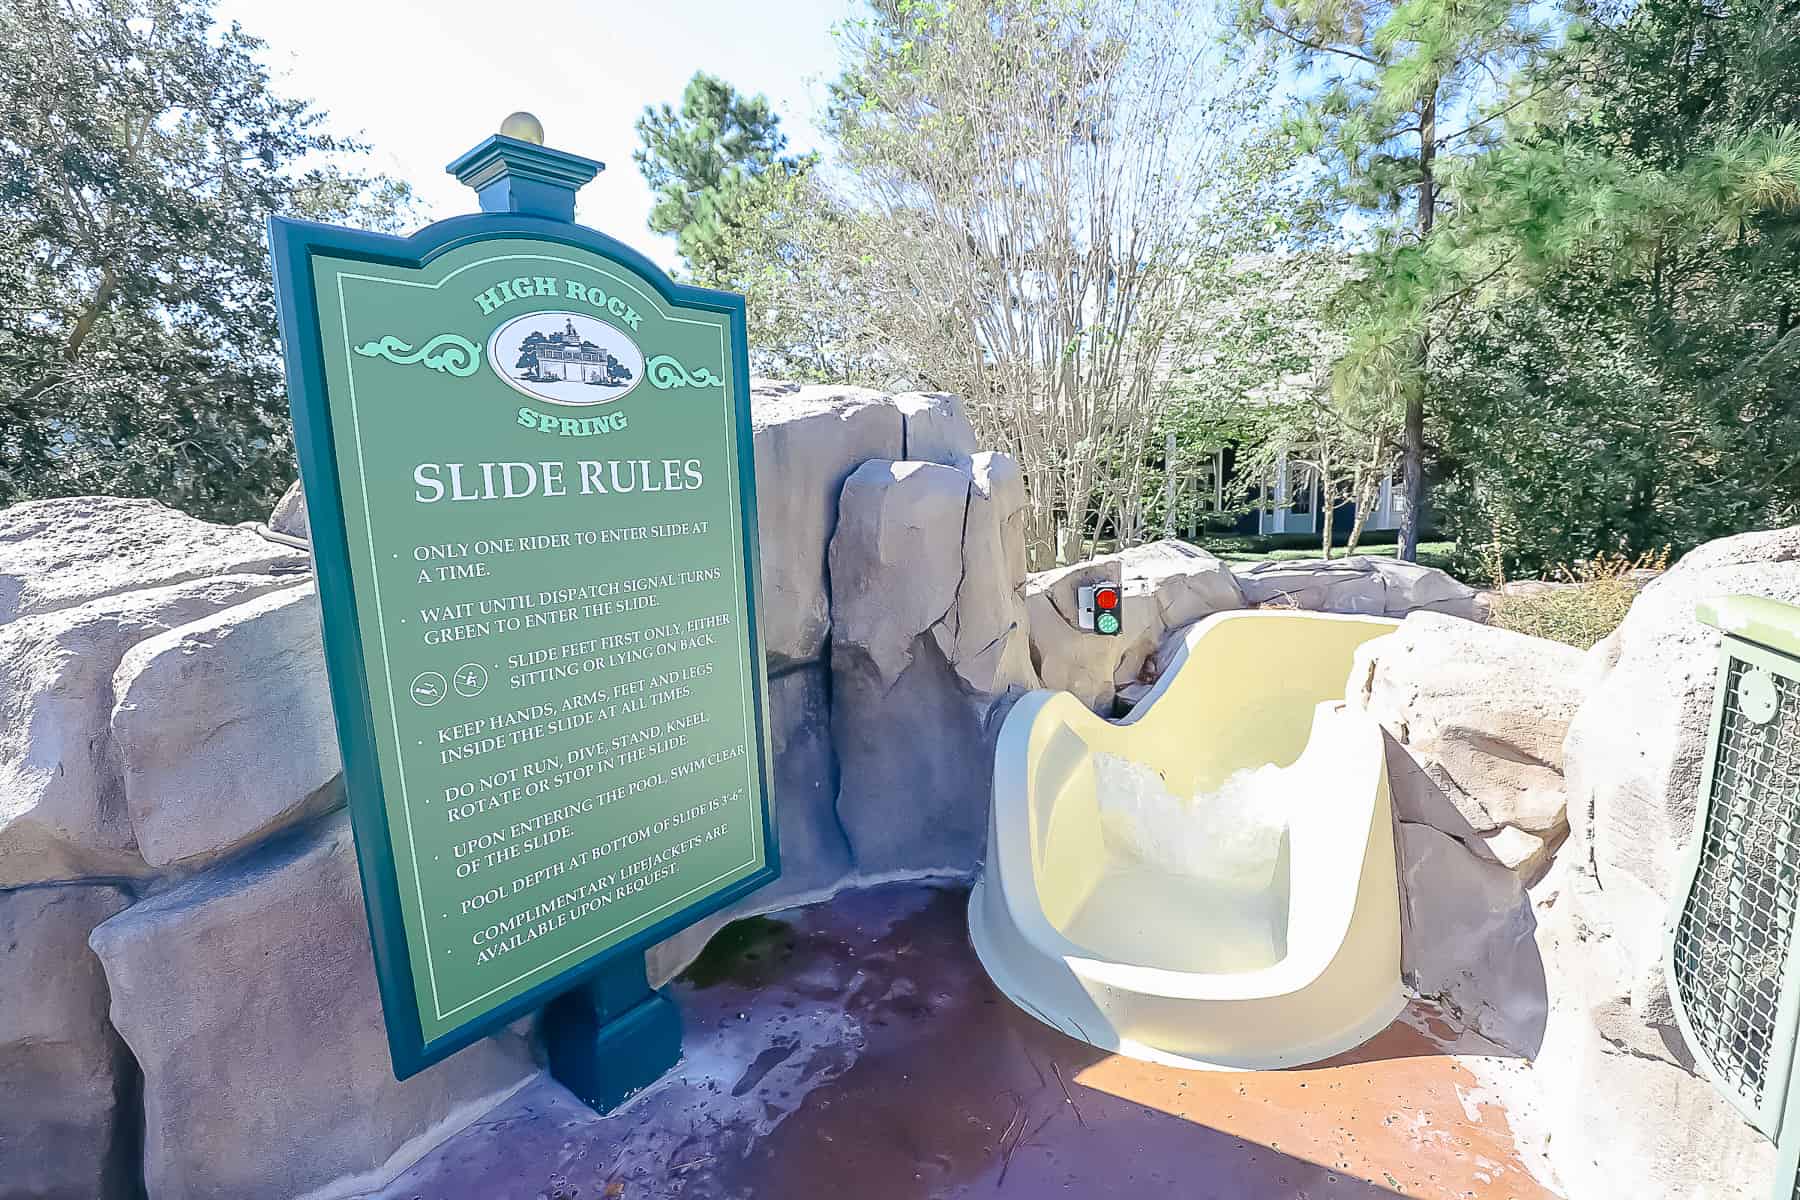 posted slide rules for the High Rock Springs slide 